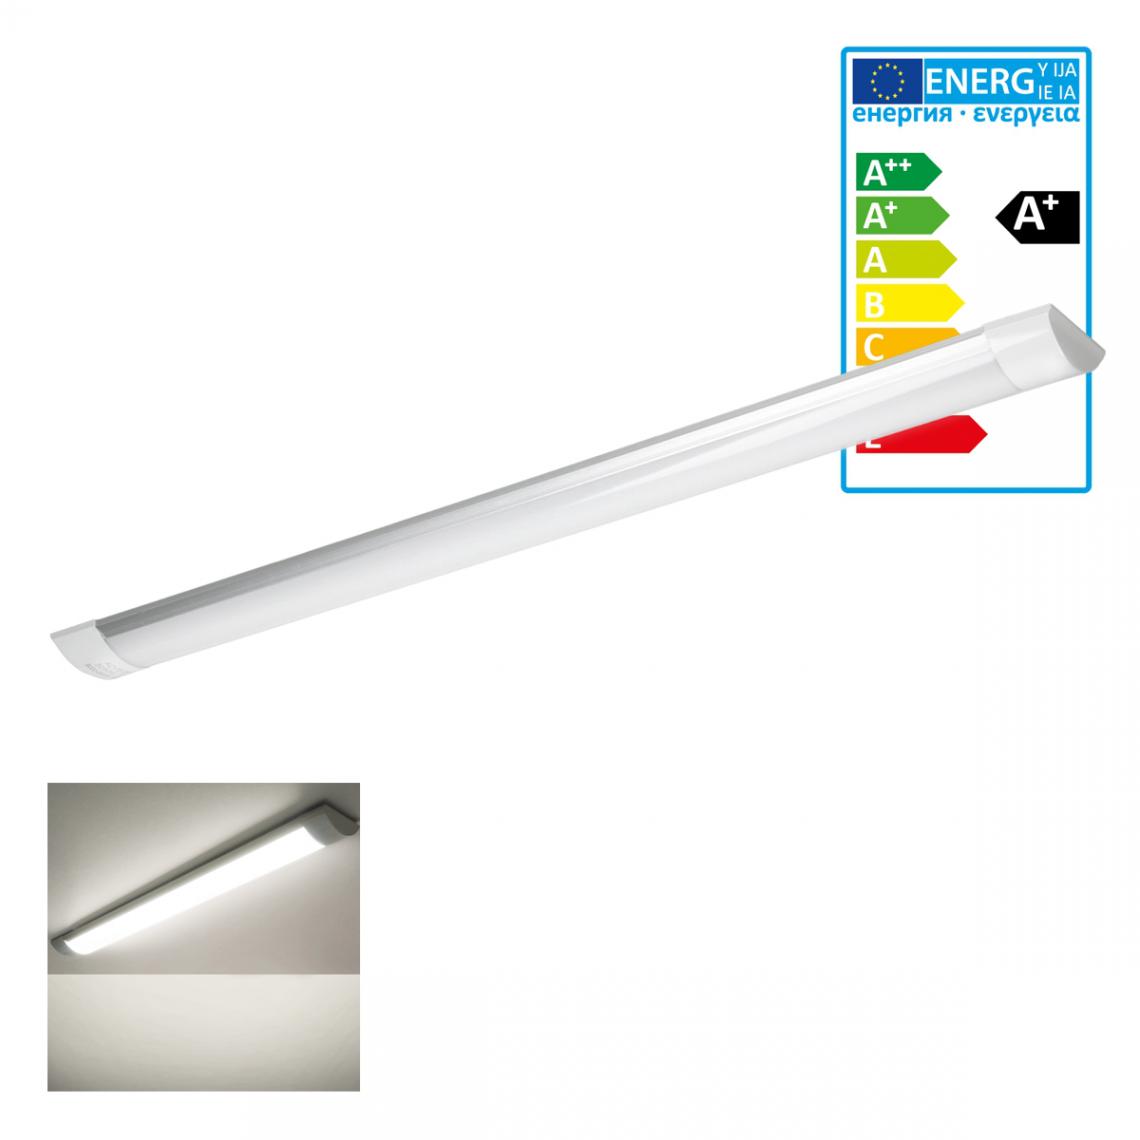 Ecd Germany - Set 4x LED batten tube 28W 90cm blanc chaud surface luminaire slim barre plafond - Tubes et néons